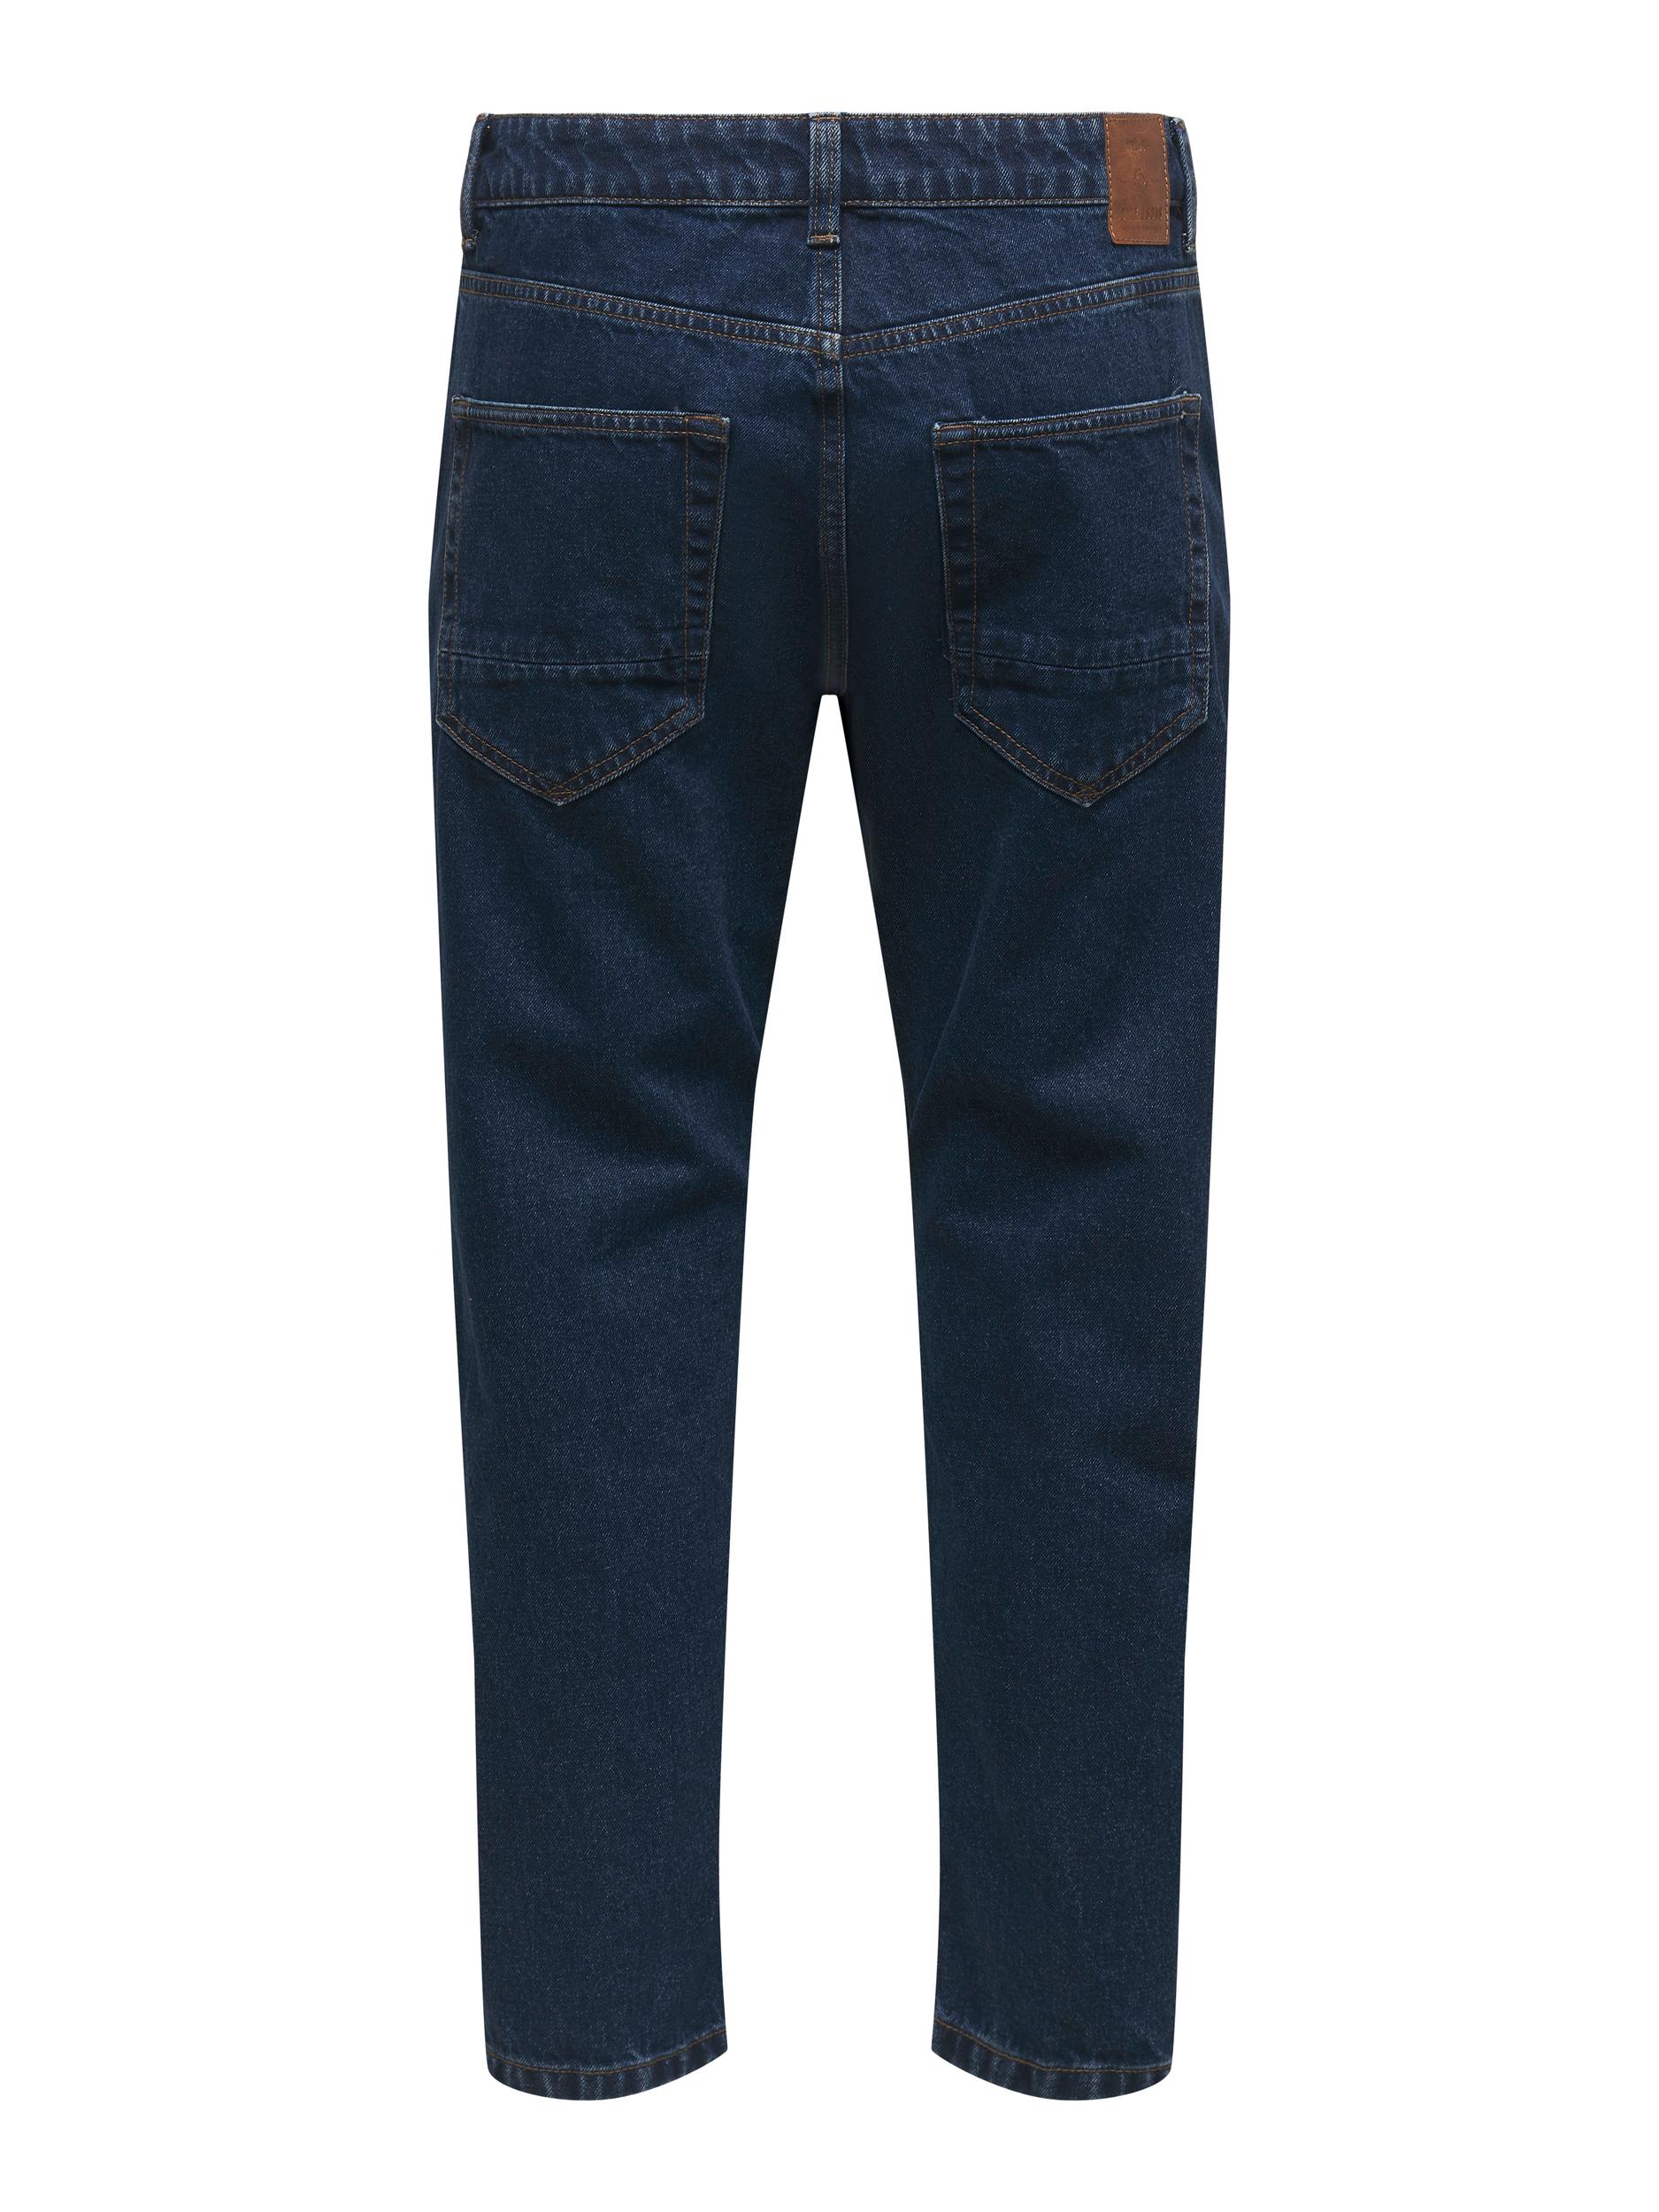 Only & Sons Avi Beam Jeans, Blue Denim, W29/L30